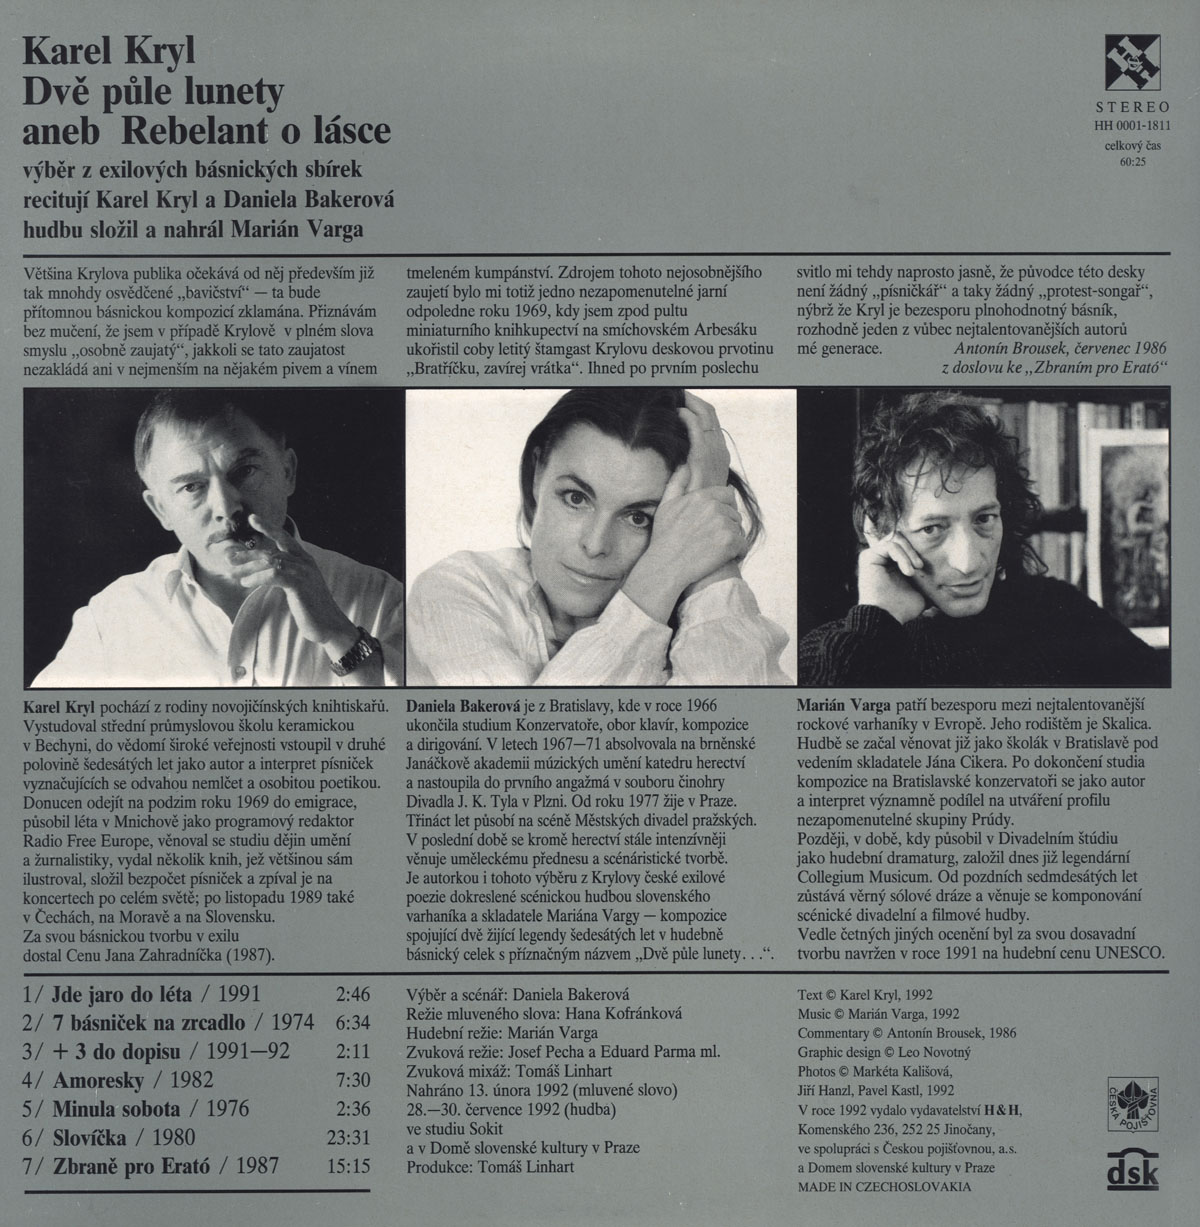  KAREL KRYL - DVĚ PŮLE LUNETY - LP 2